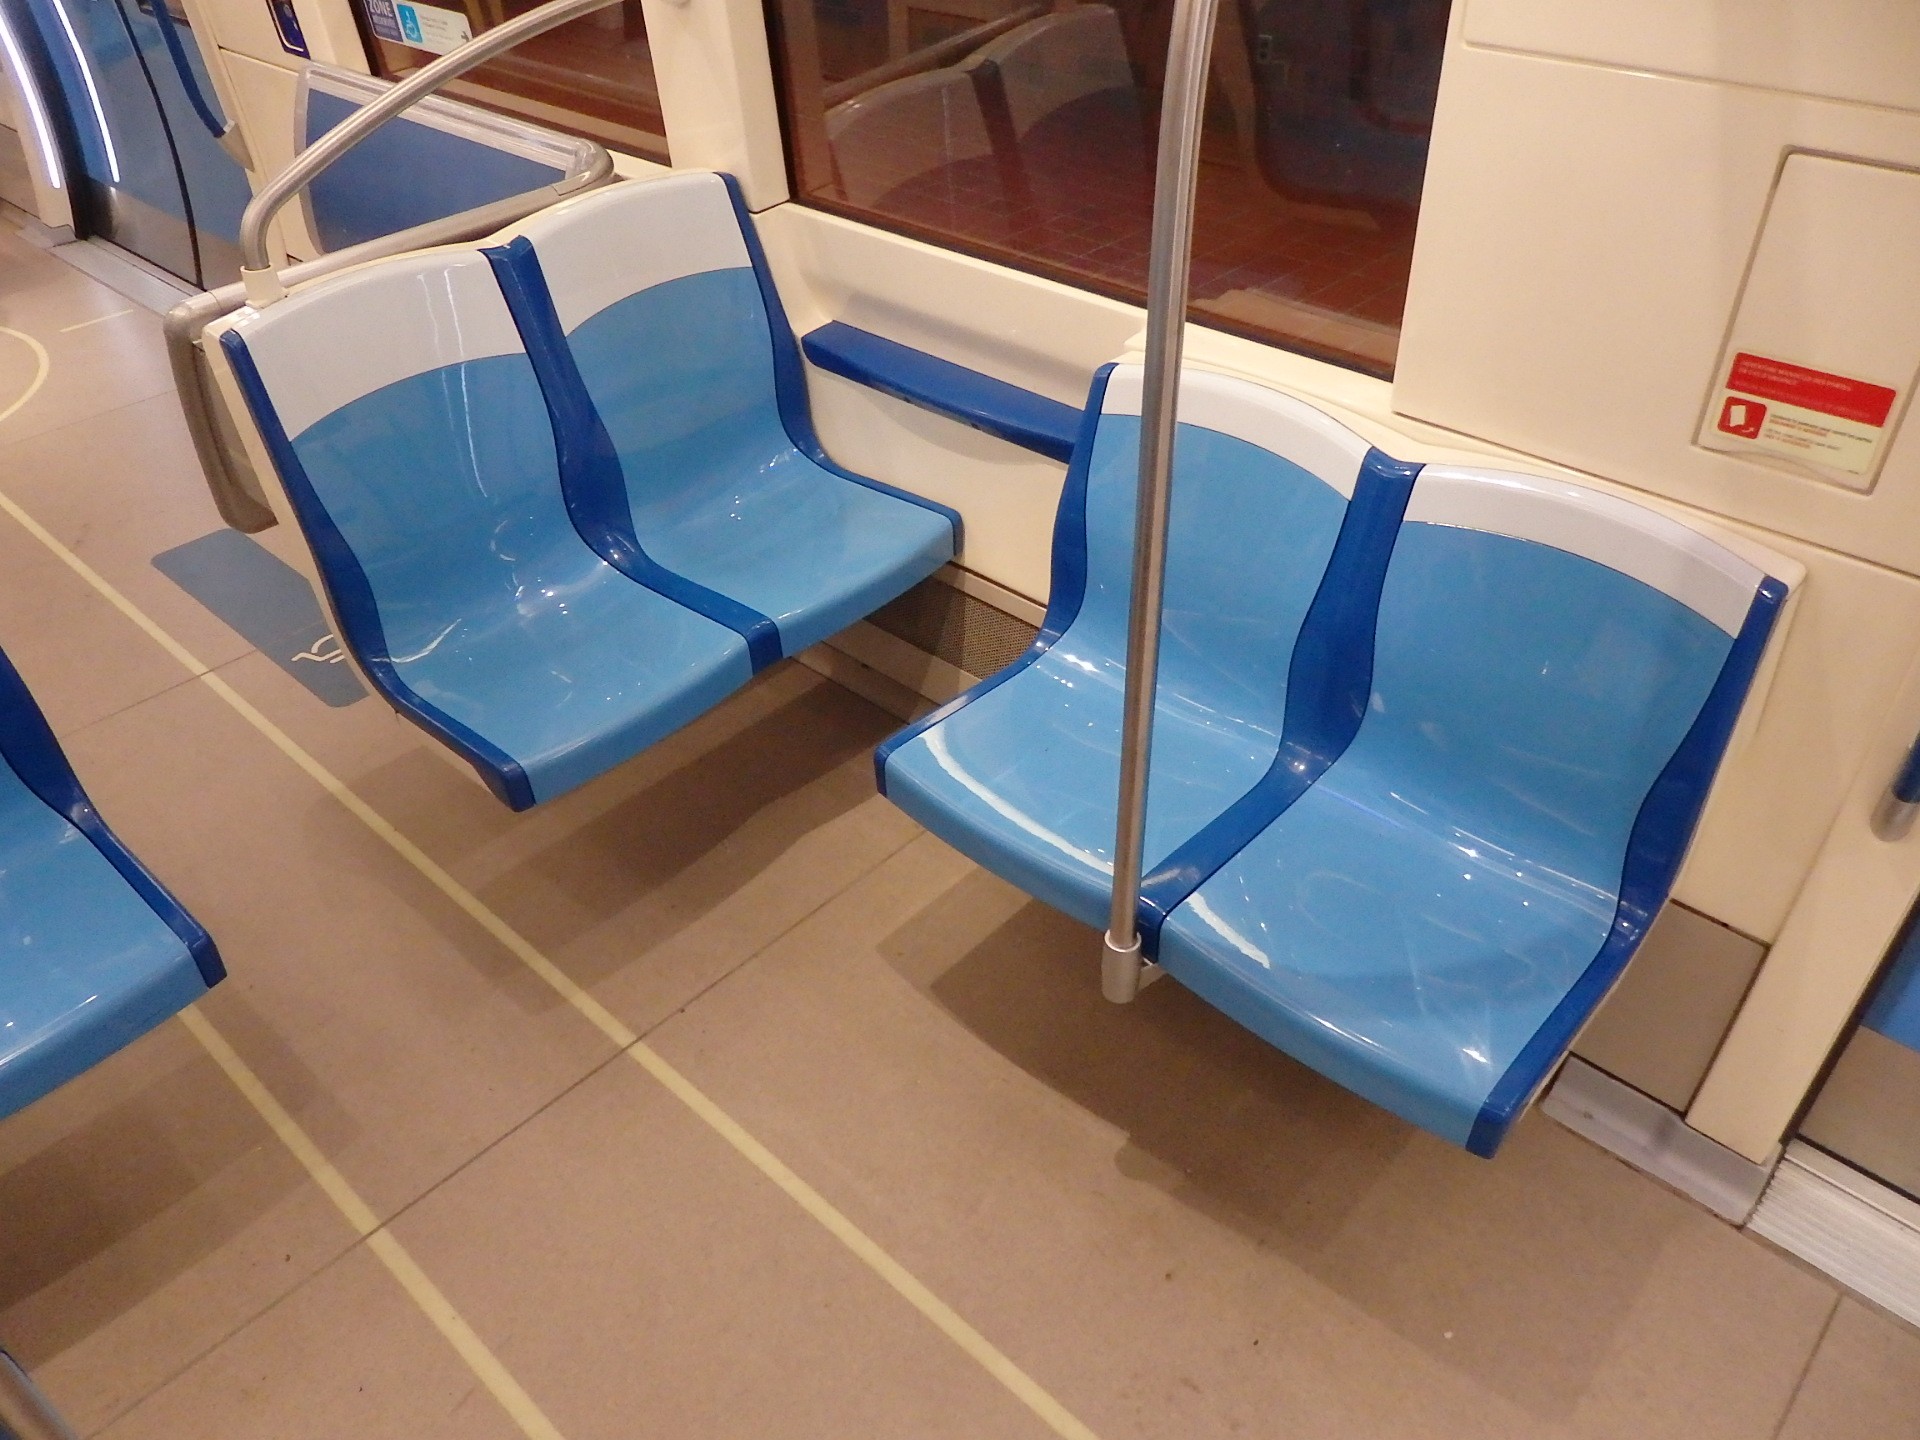 Foto: Metro de Montreal - Montreal (Quebec), Canadá